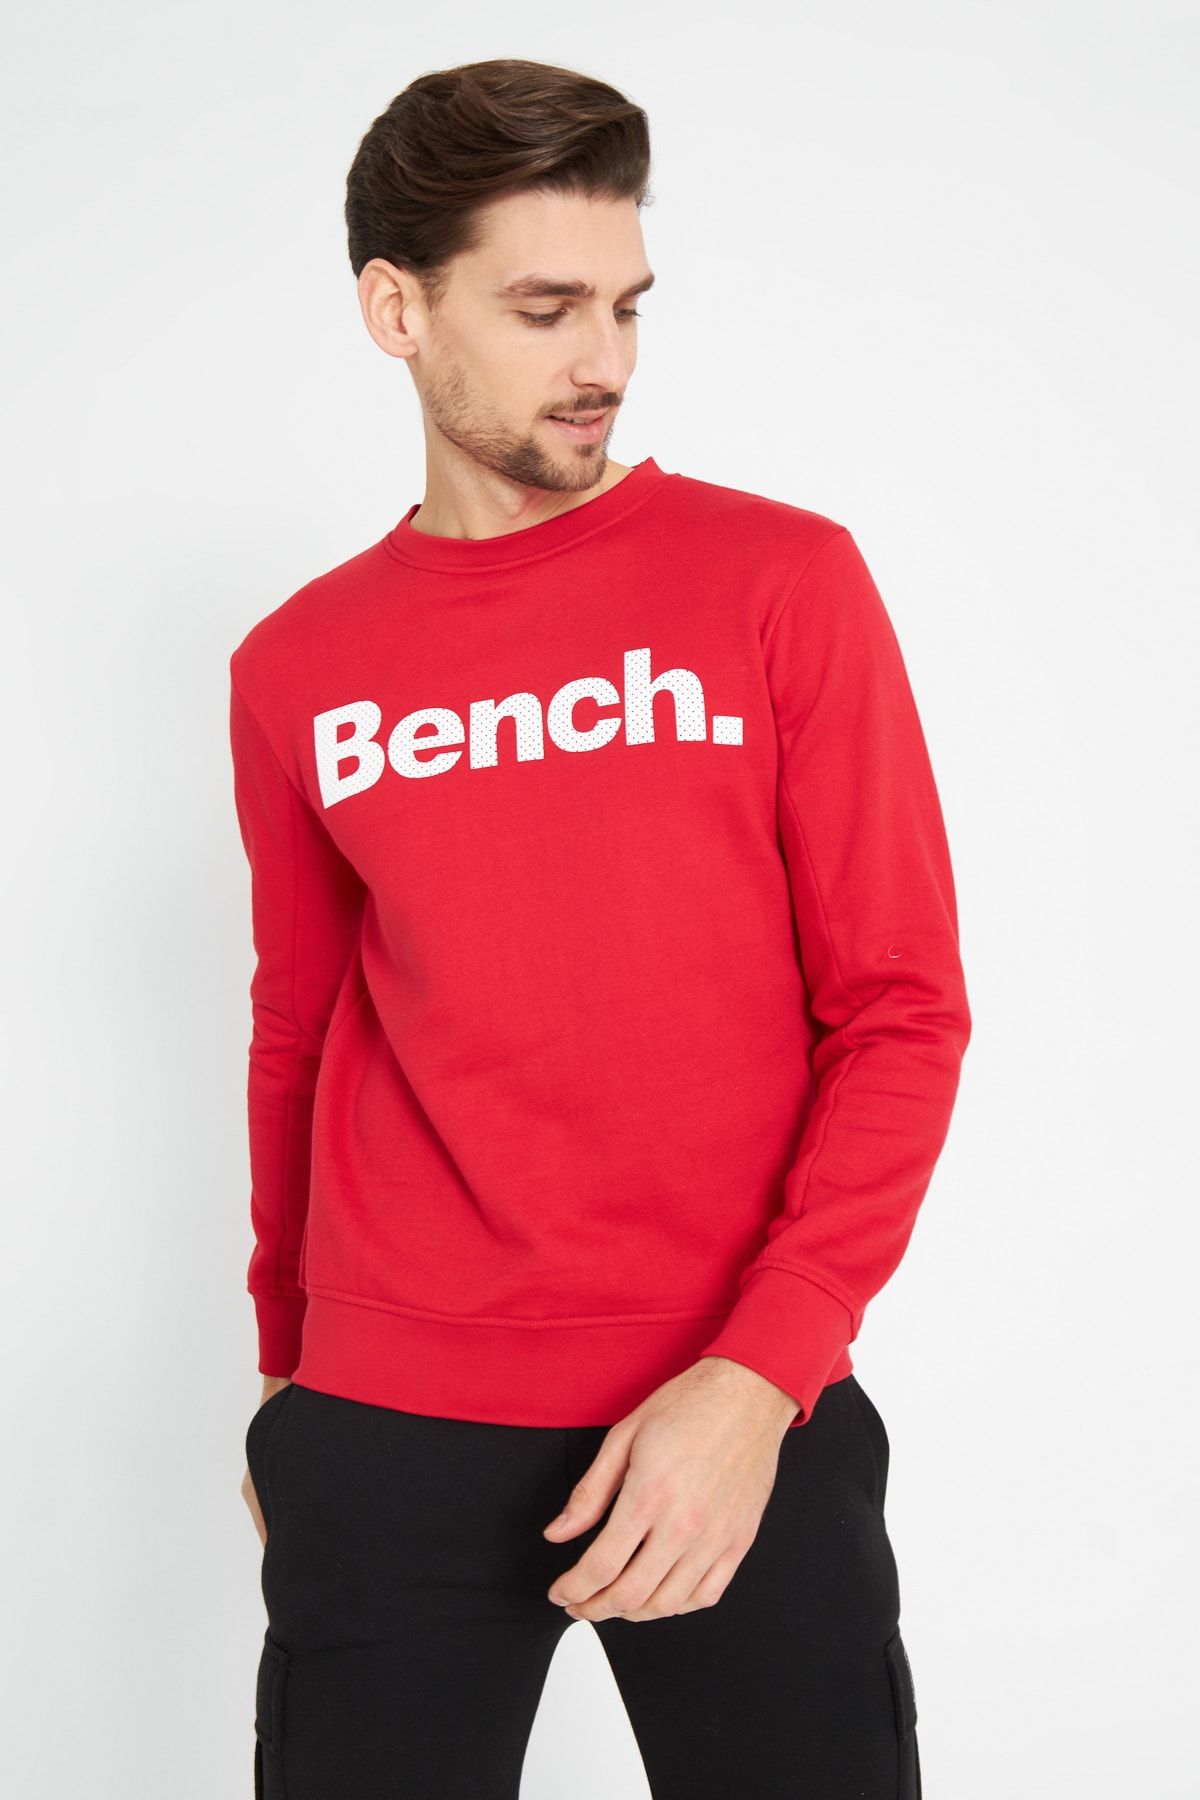 BENCH Sweatshirt - Red - Regular fit - Trendyol